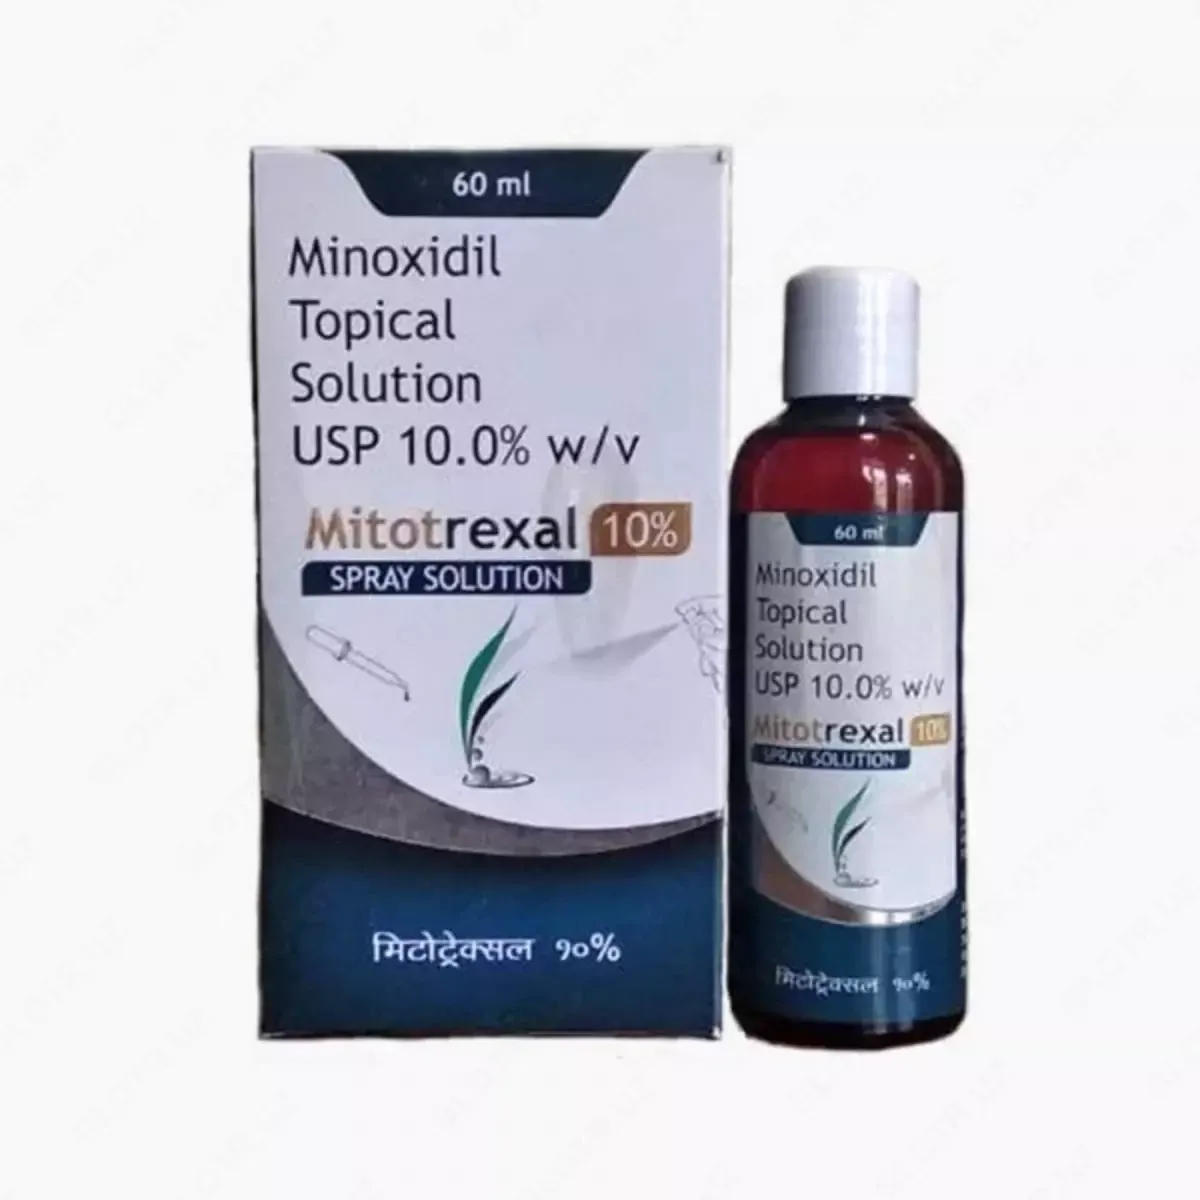 Minoxidil (Mitotrexal) 10% - Препарат против облысения - Topical Solution#1